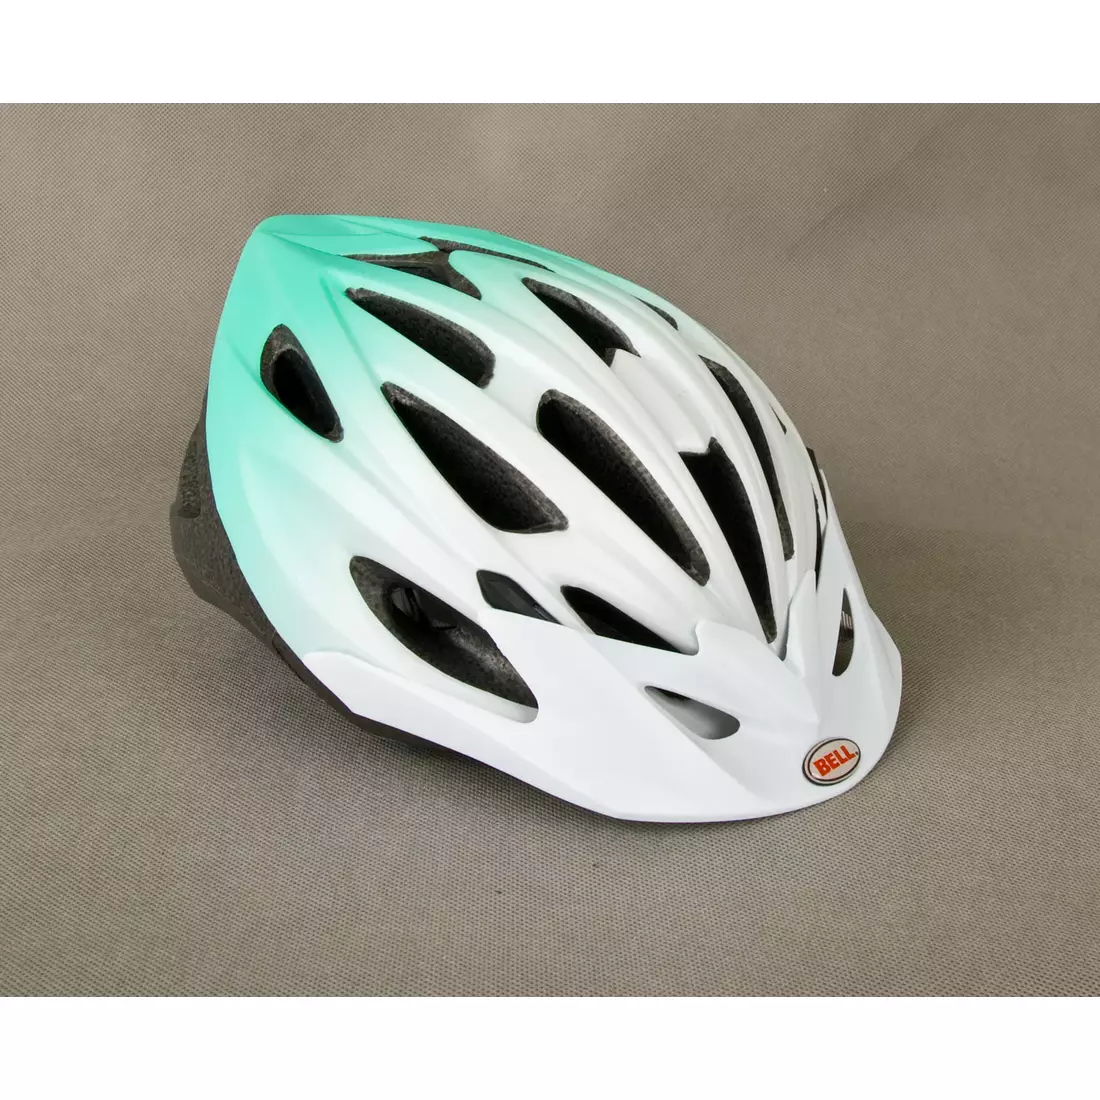 BELL SOLARA - dámska cyklistická prilba, biela a zelená